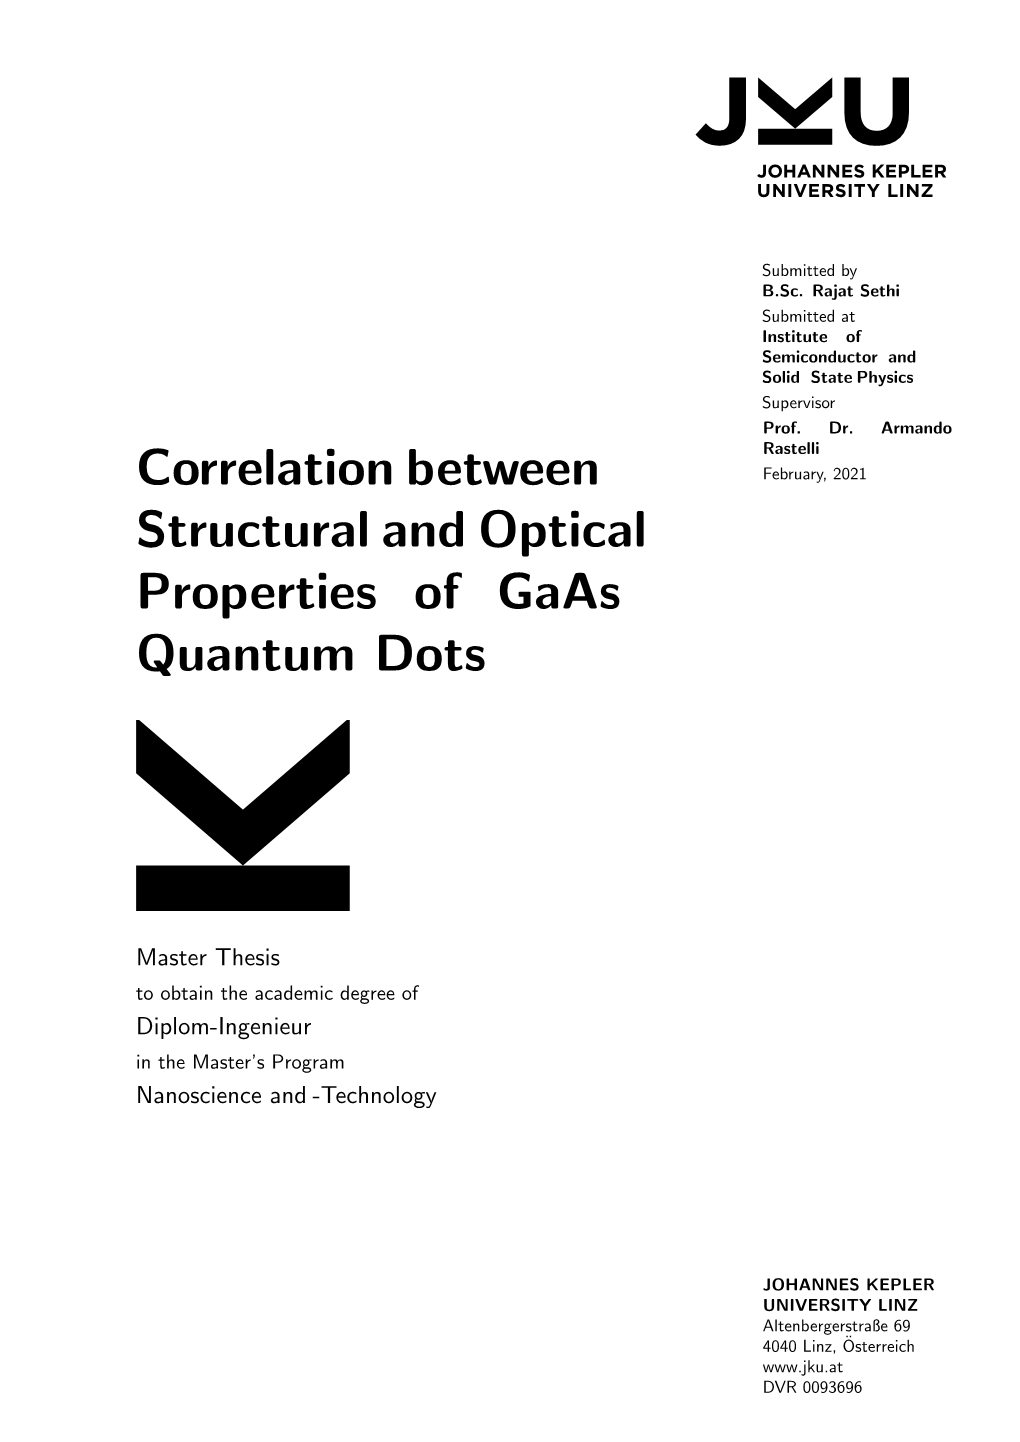 Correlation Between Structural and Optical Properties of Gaas